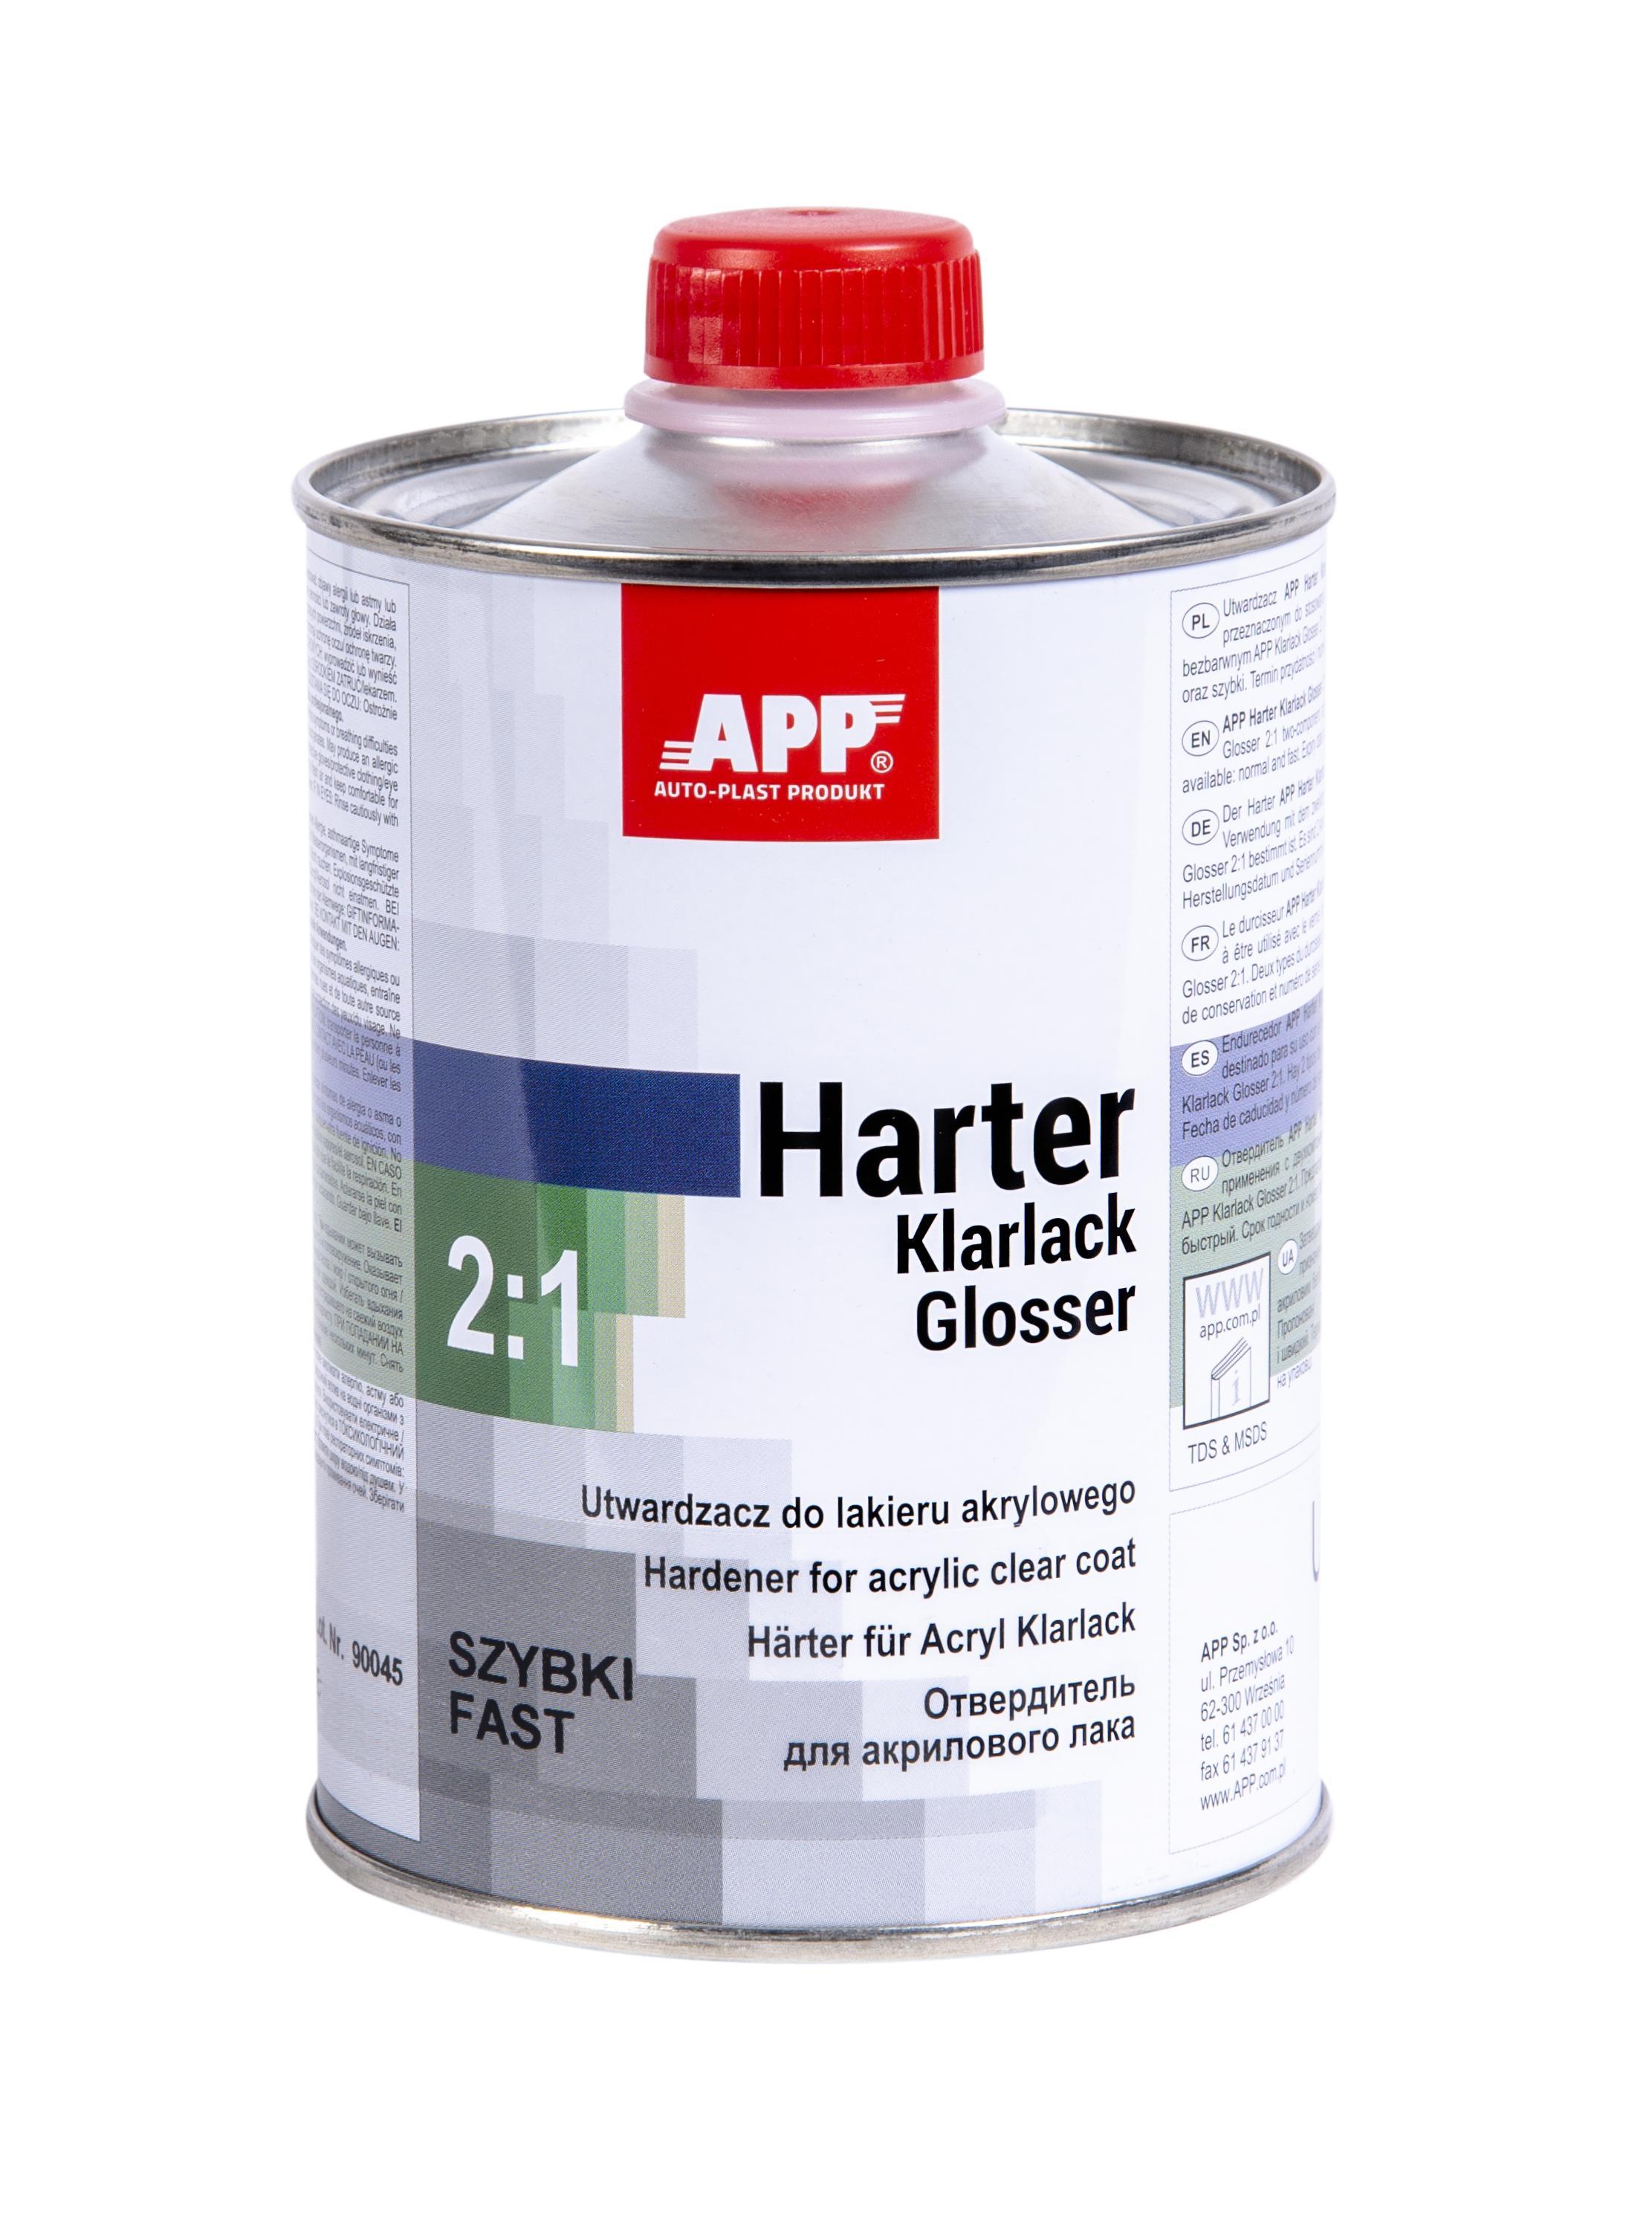 APP 020352 Härter Klarlack Glosser 2:1 - Härter für Acryllack schnell 0,5 L | aushärten Clearcoat Autolack